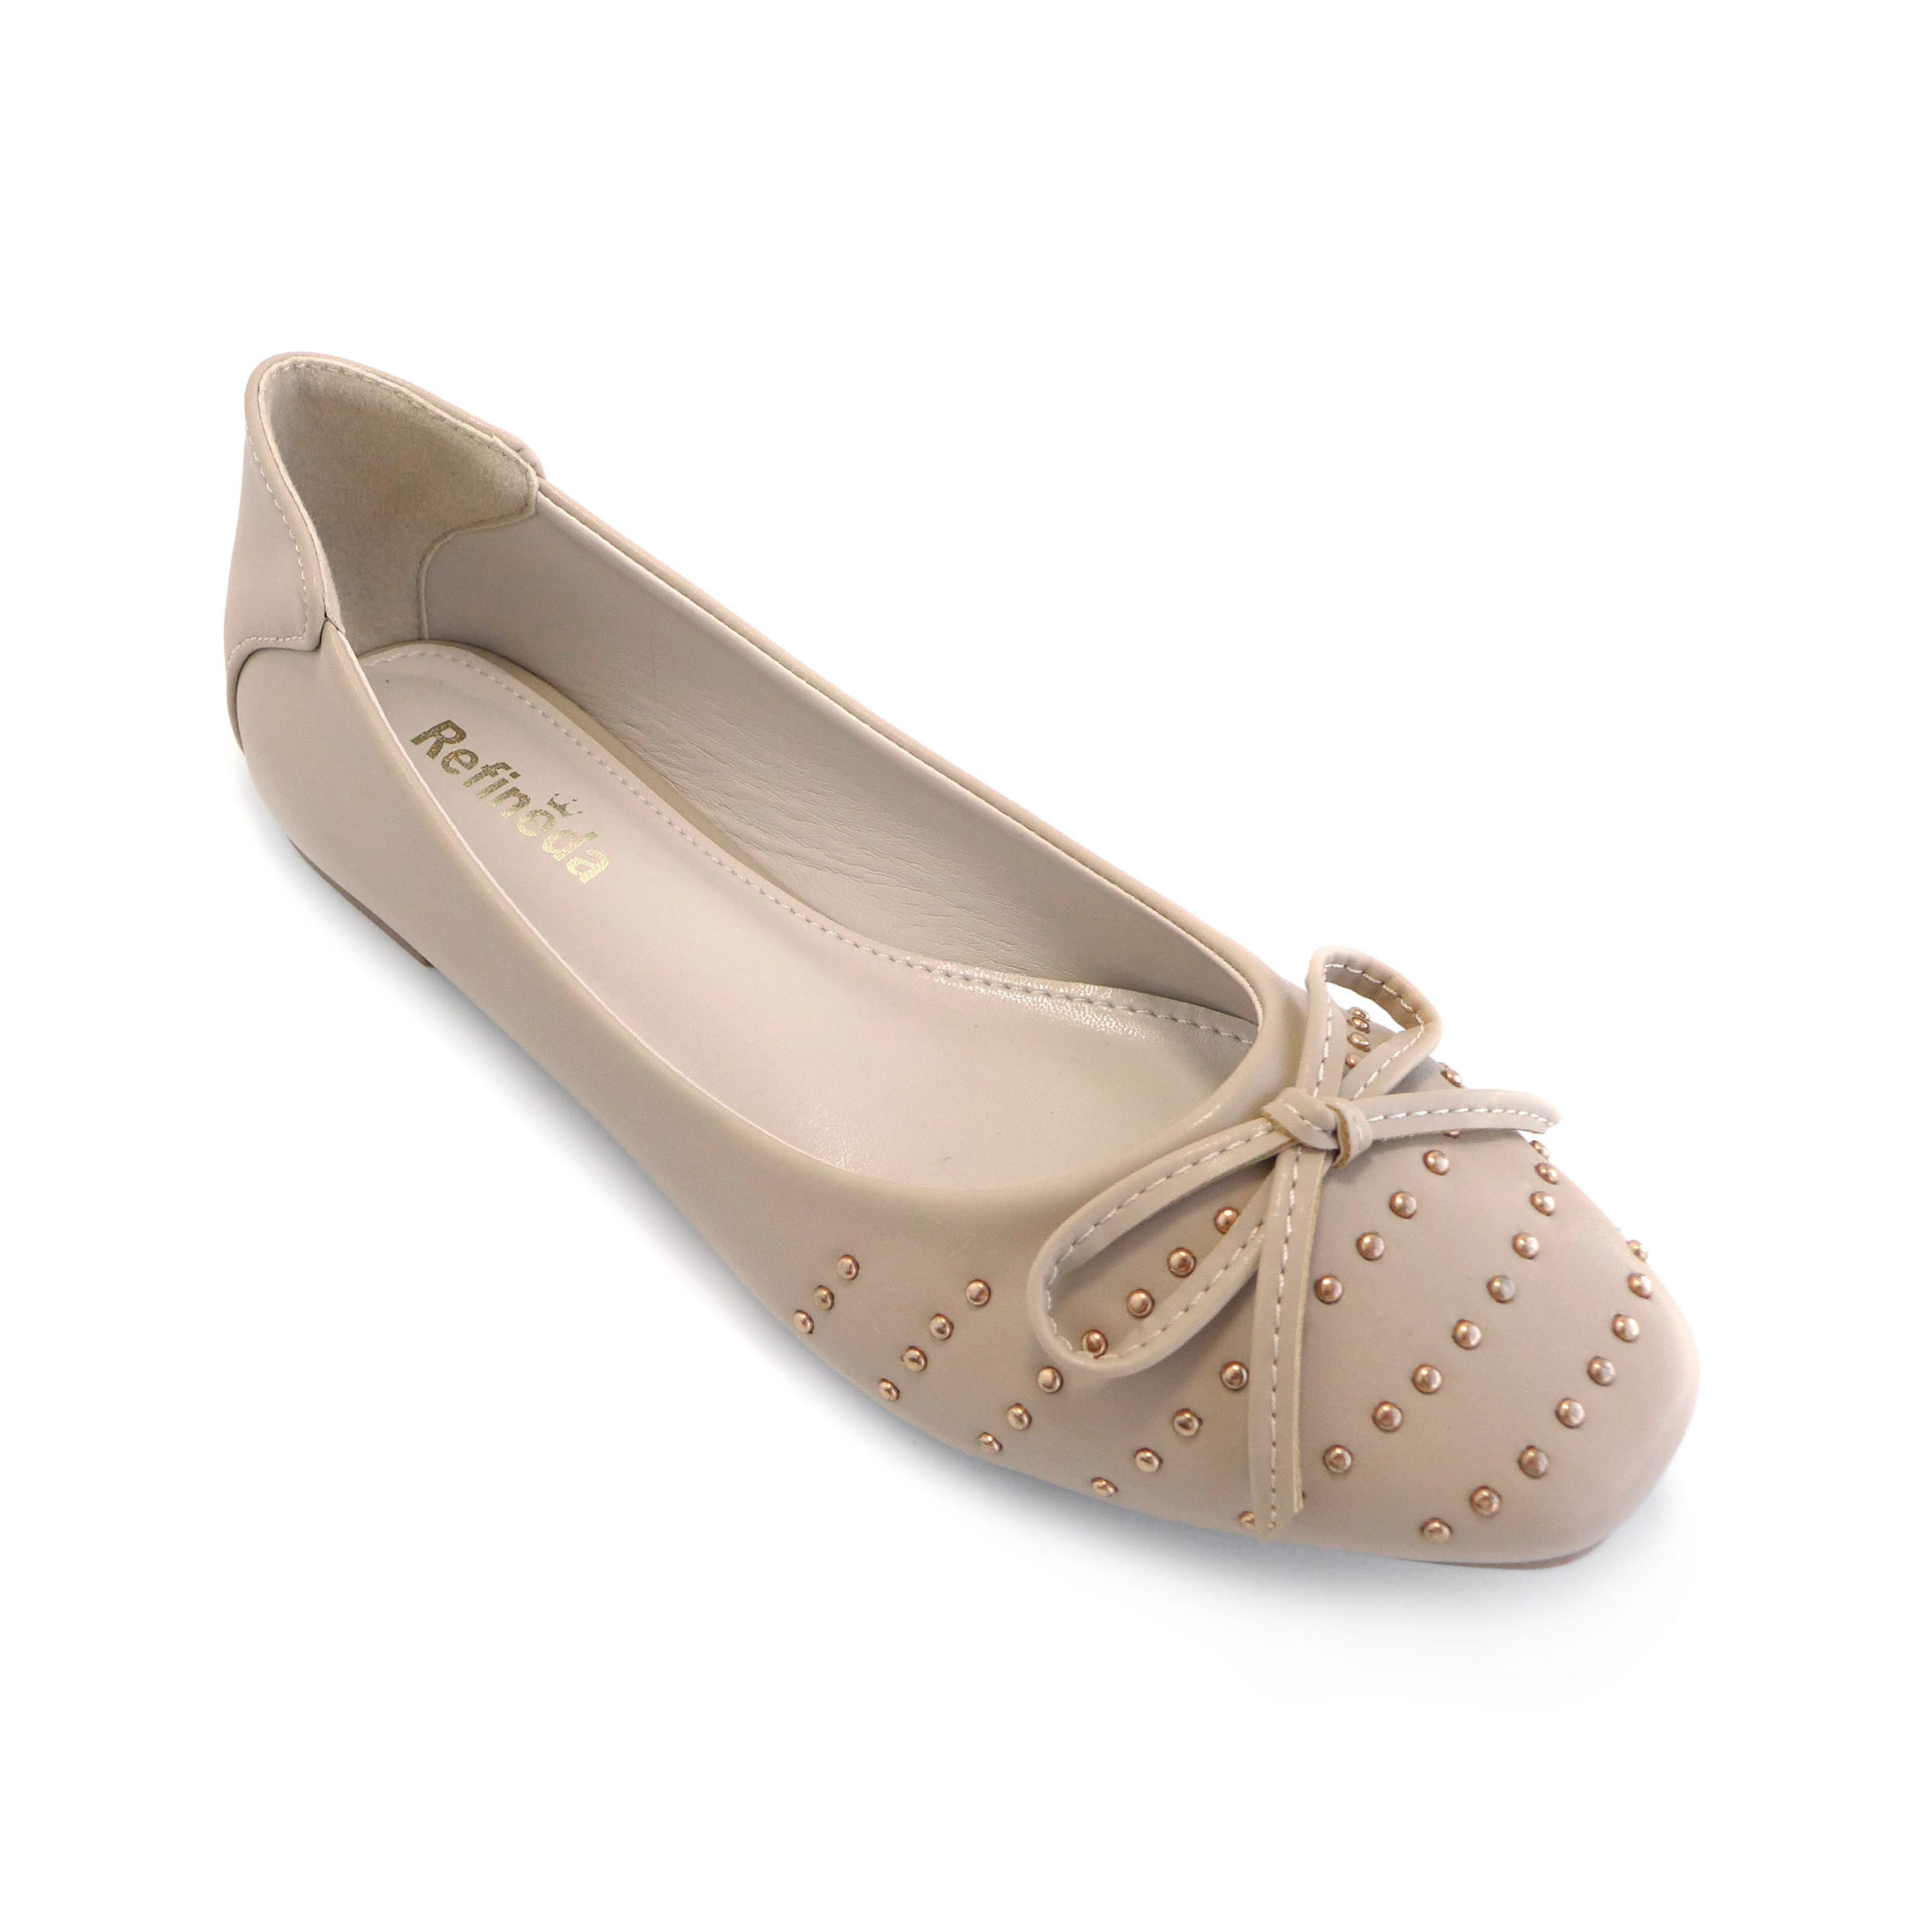 Refineda Damen Sole-Simple Ballerina Walking Flats Schuhe